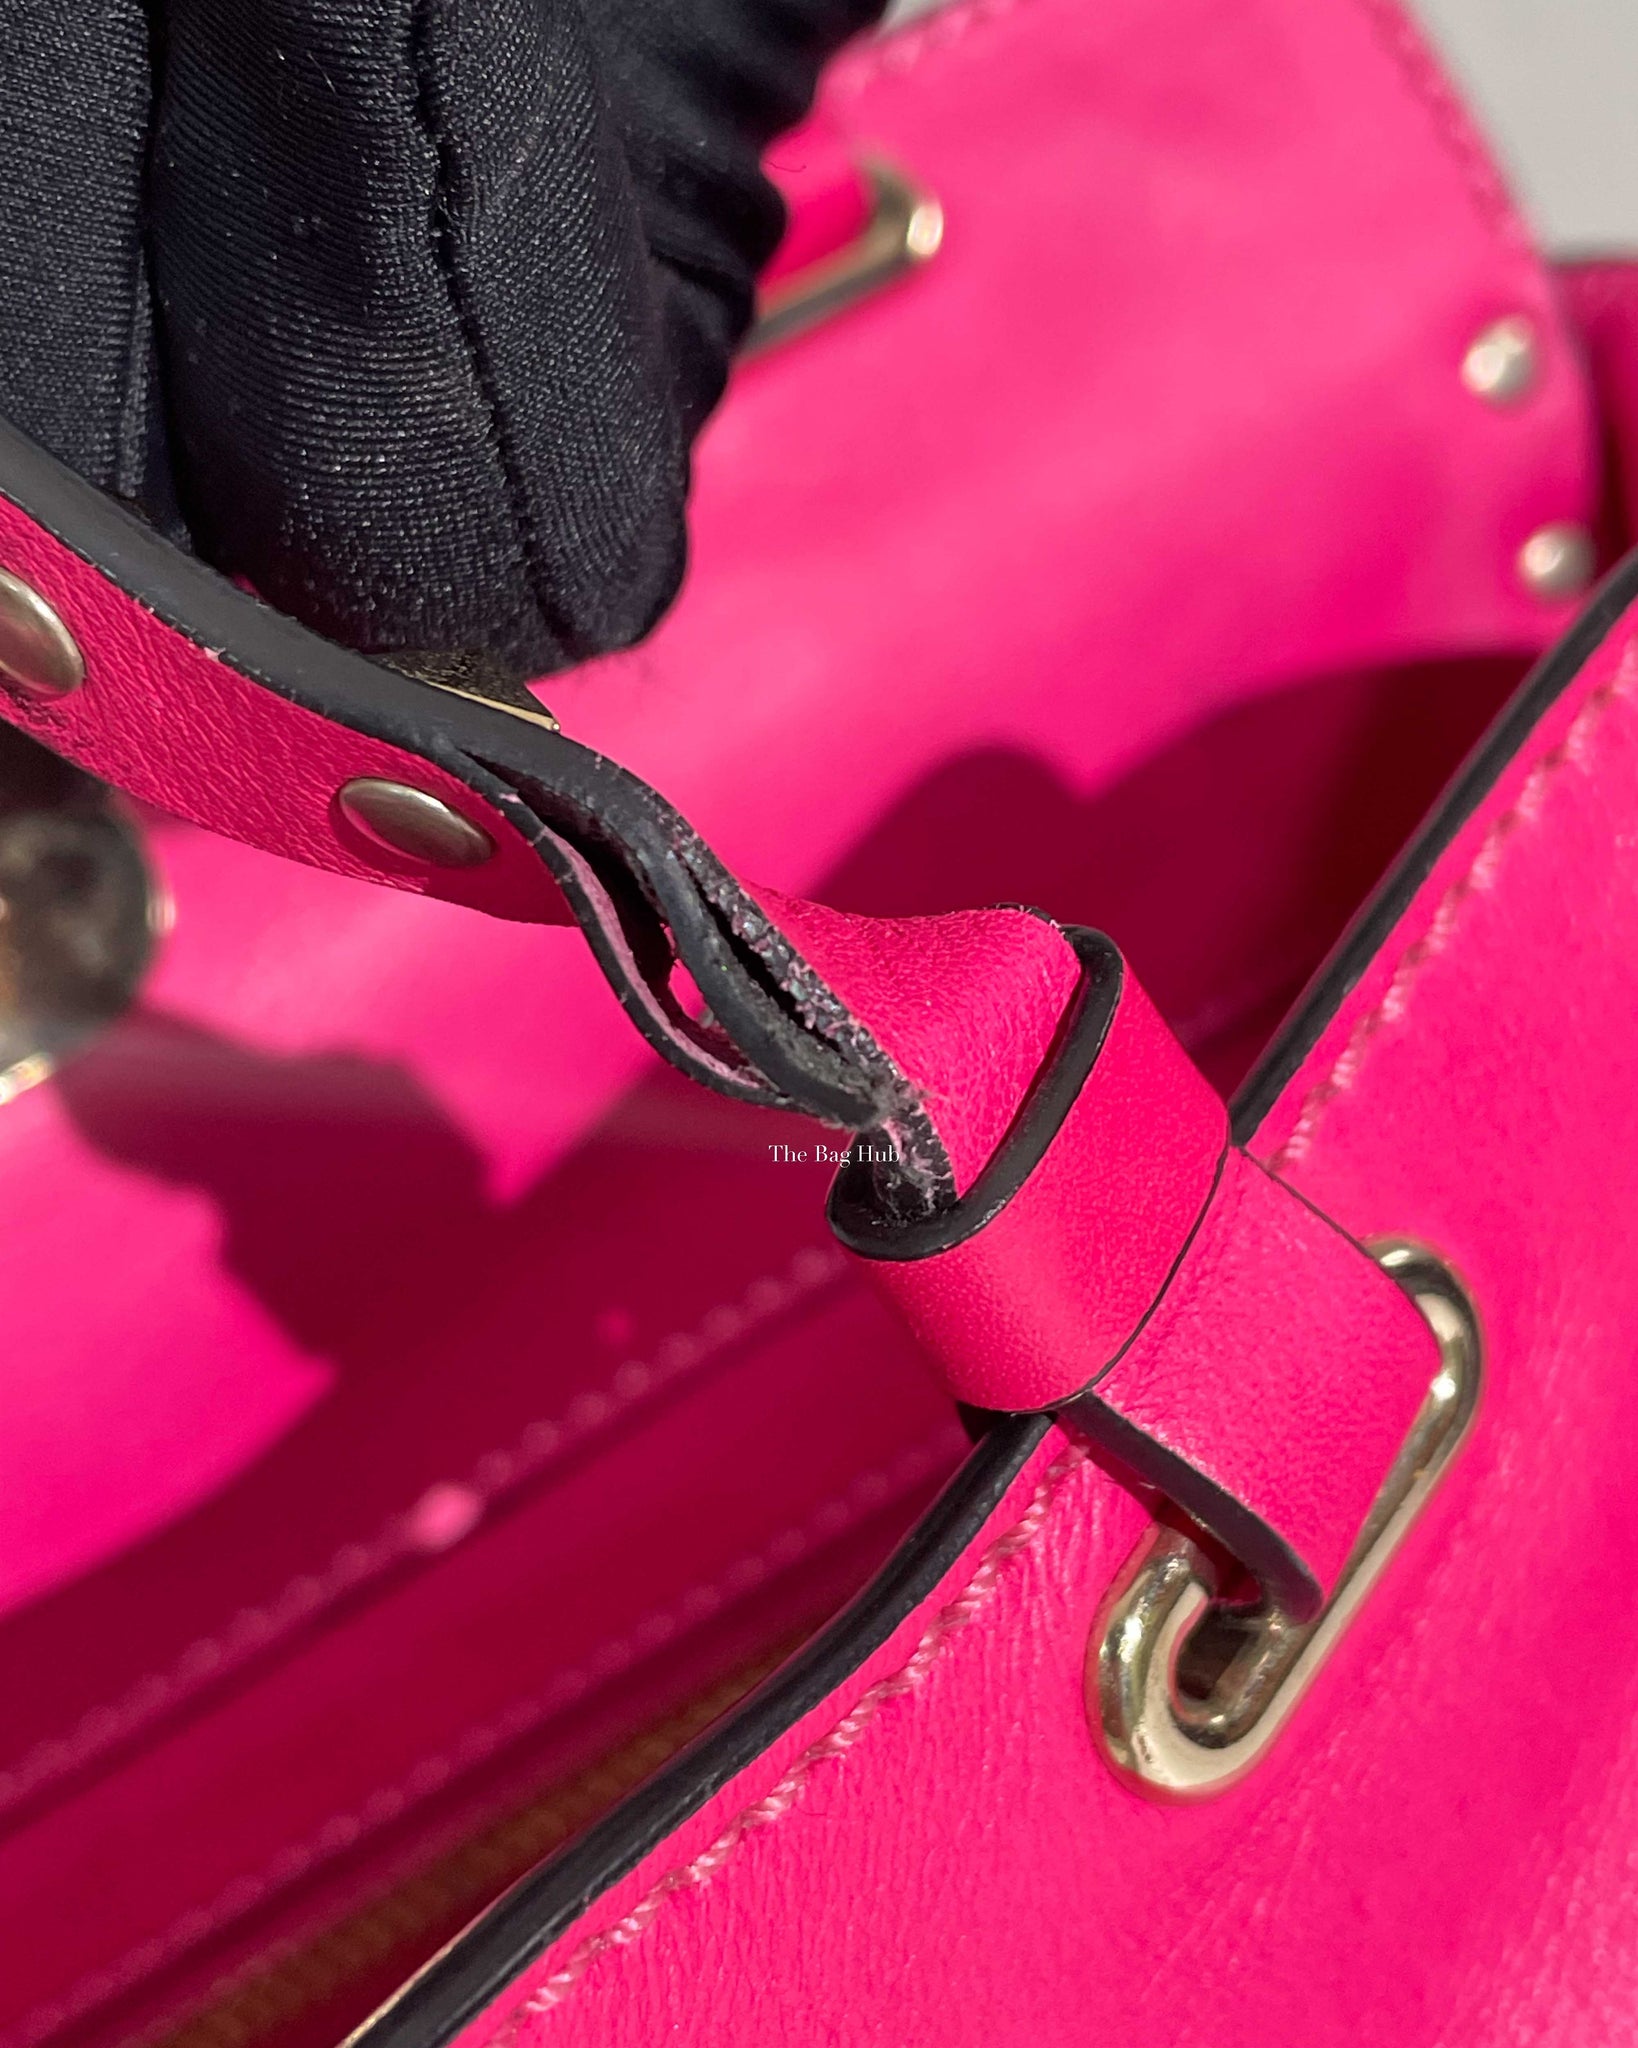 Valentino Pink Leather Rockstud Trapeze Small Crossbody Bag – On